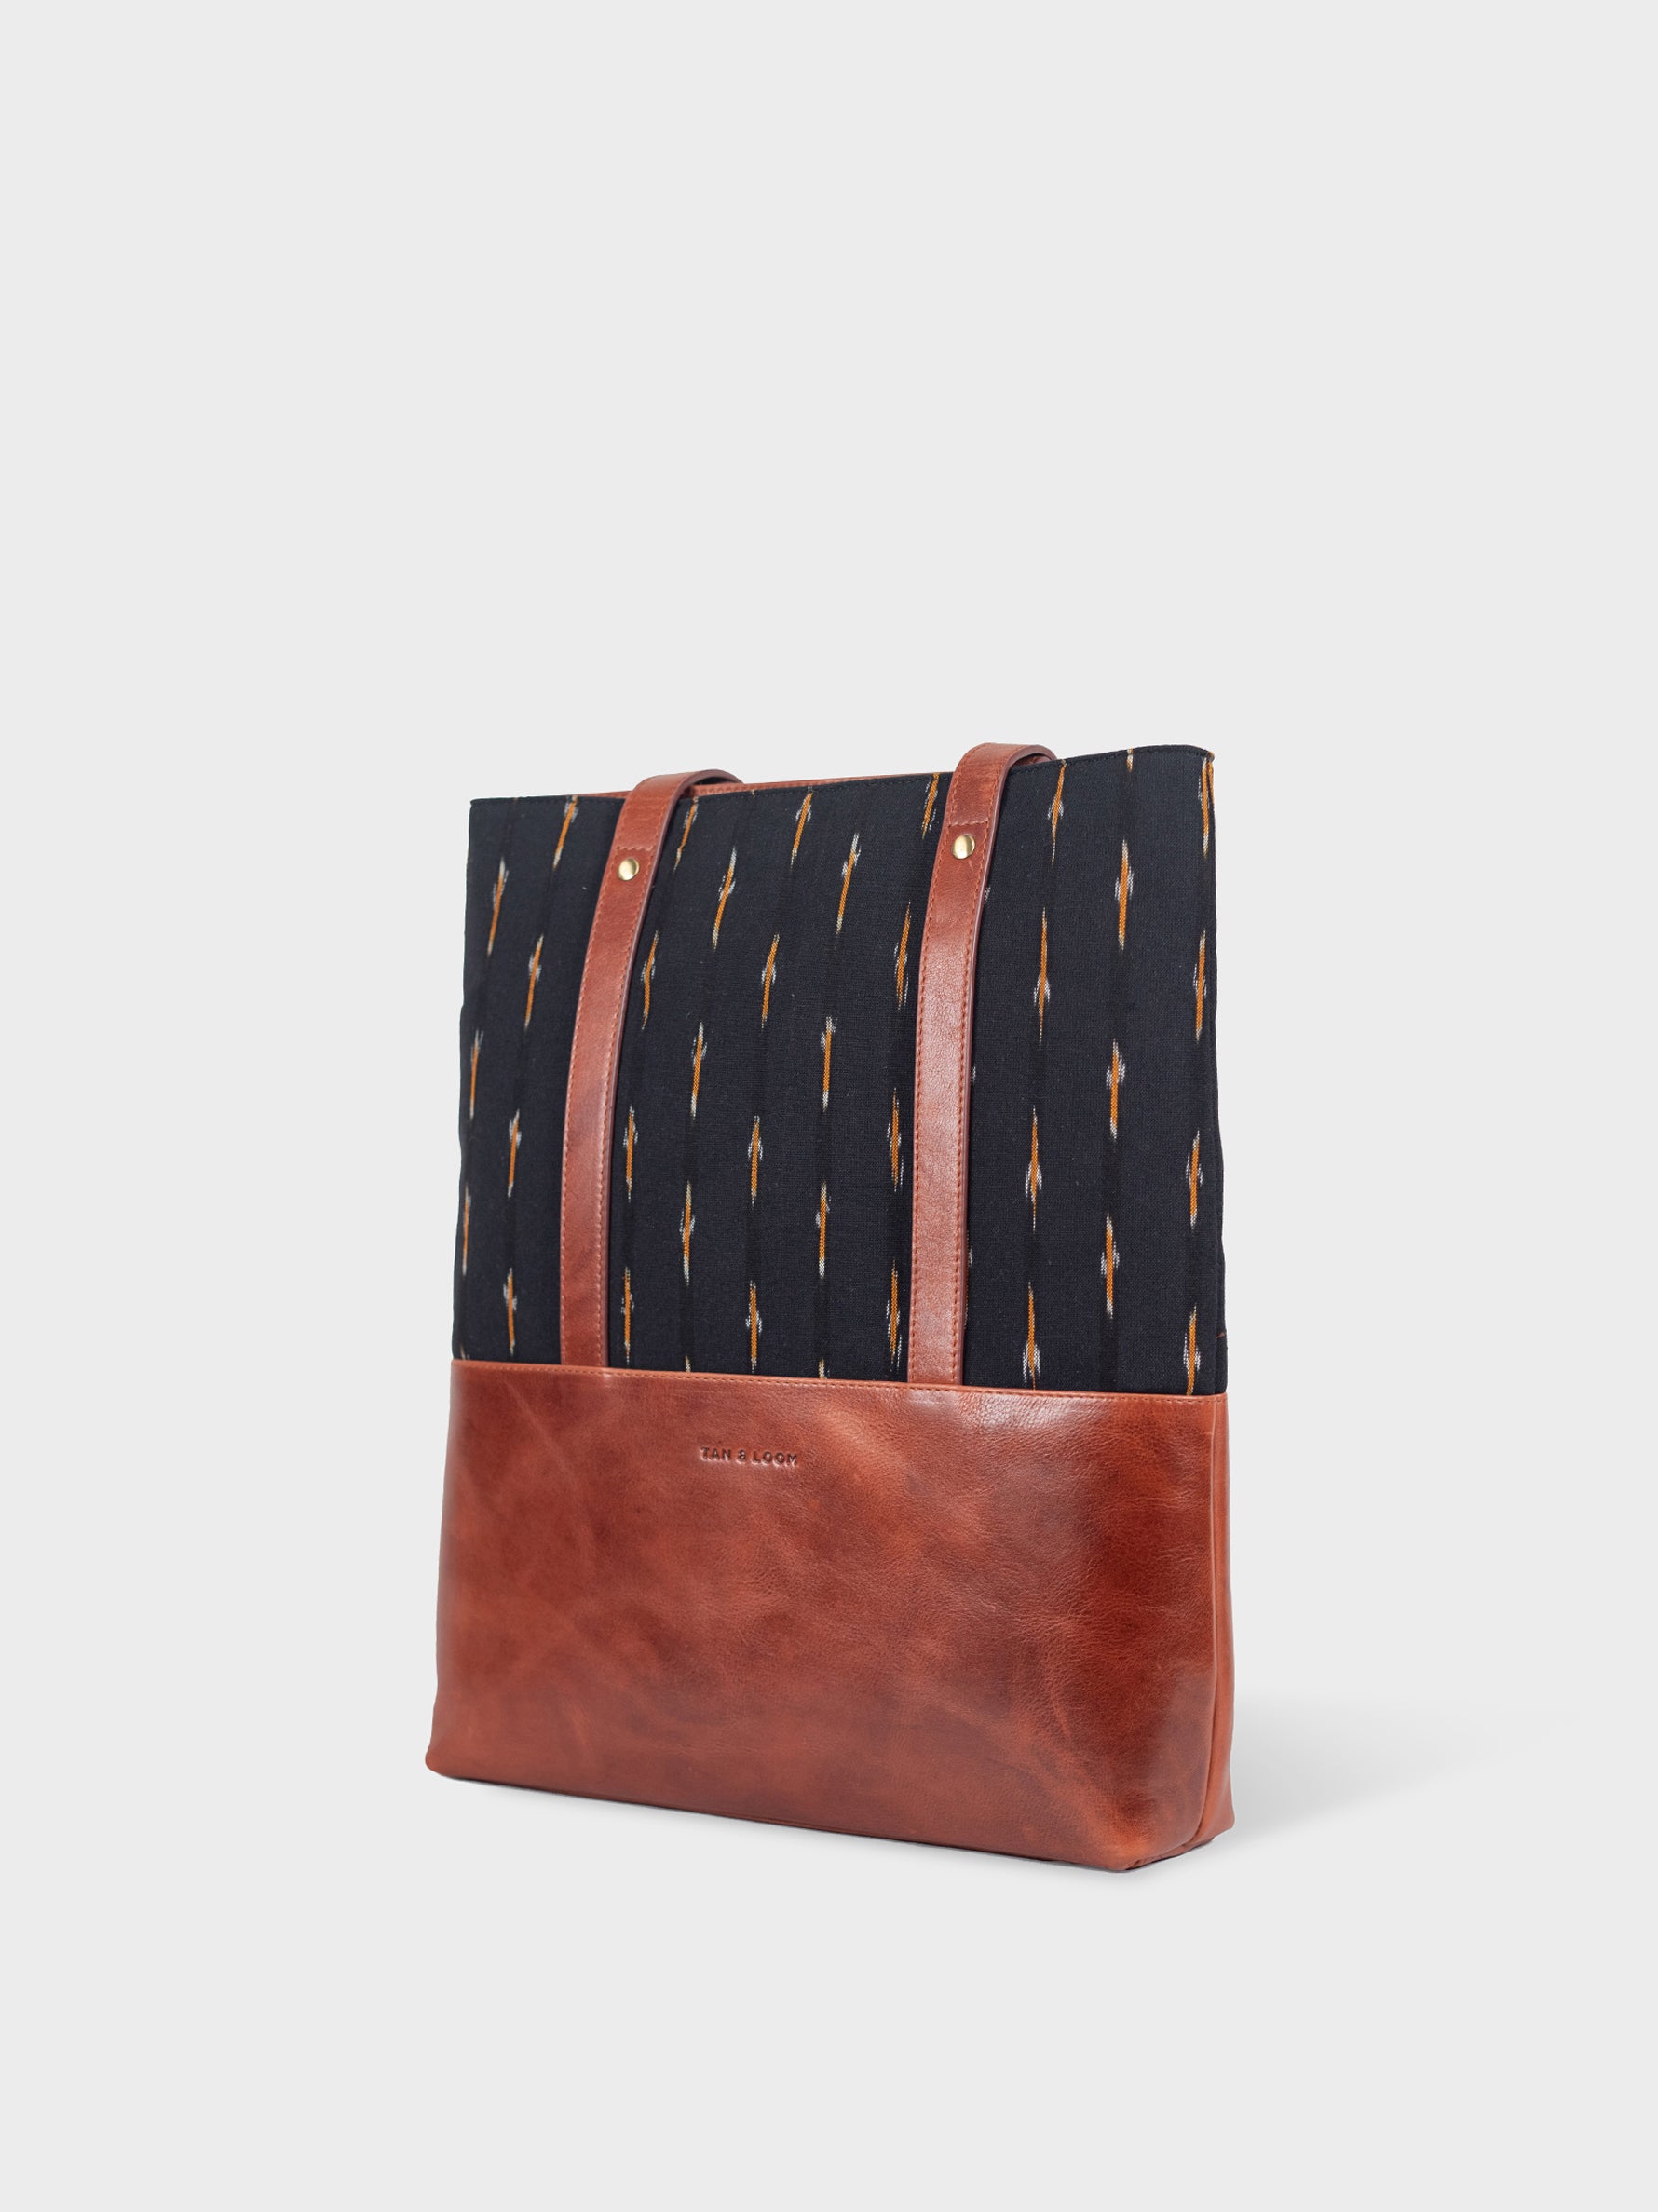 DKNY Black and Tan Brown Leather shoulder bag purse handbag with silver  hardware | eBay